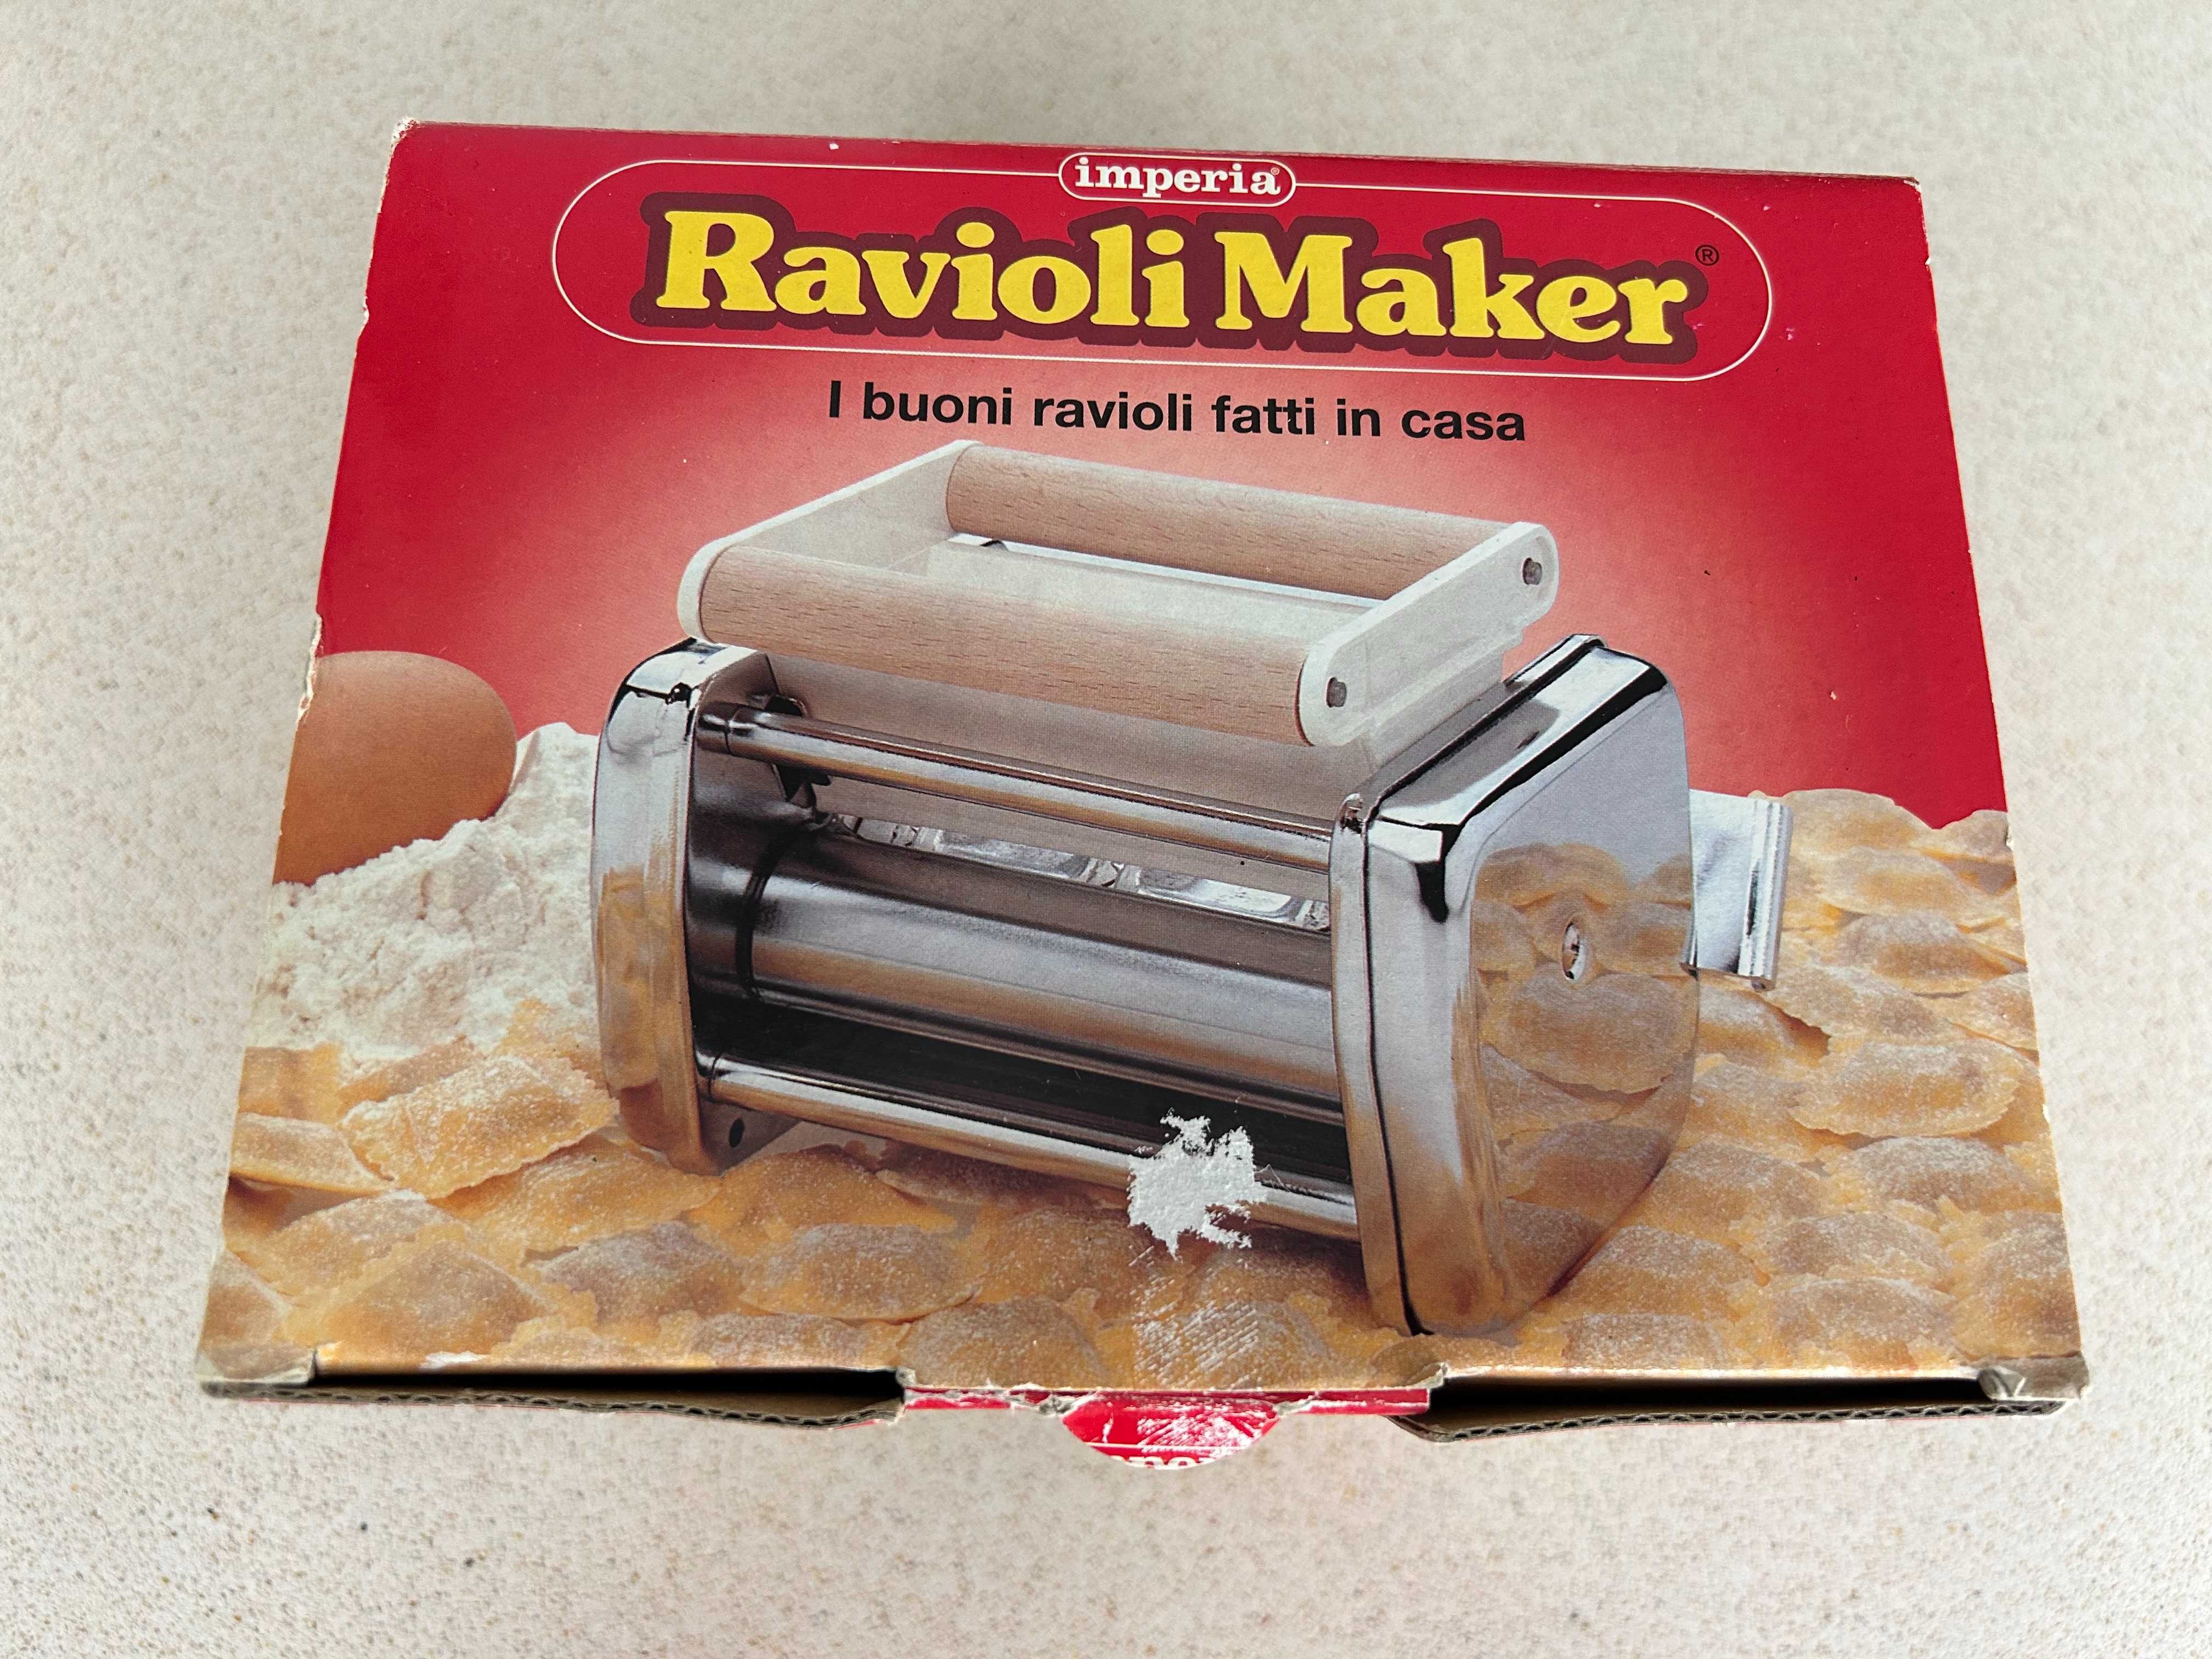 Ravioli Maker - Original da prestigiada marca italiana Imperia